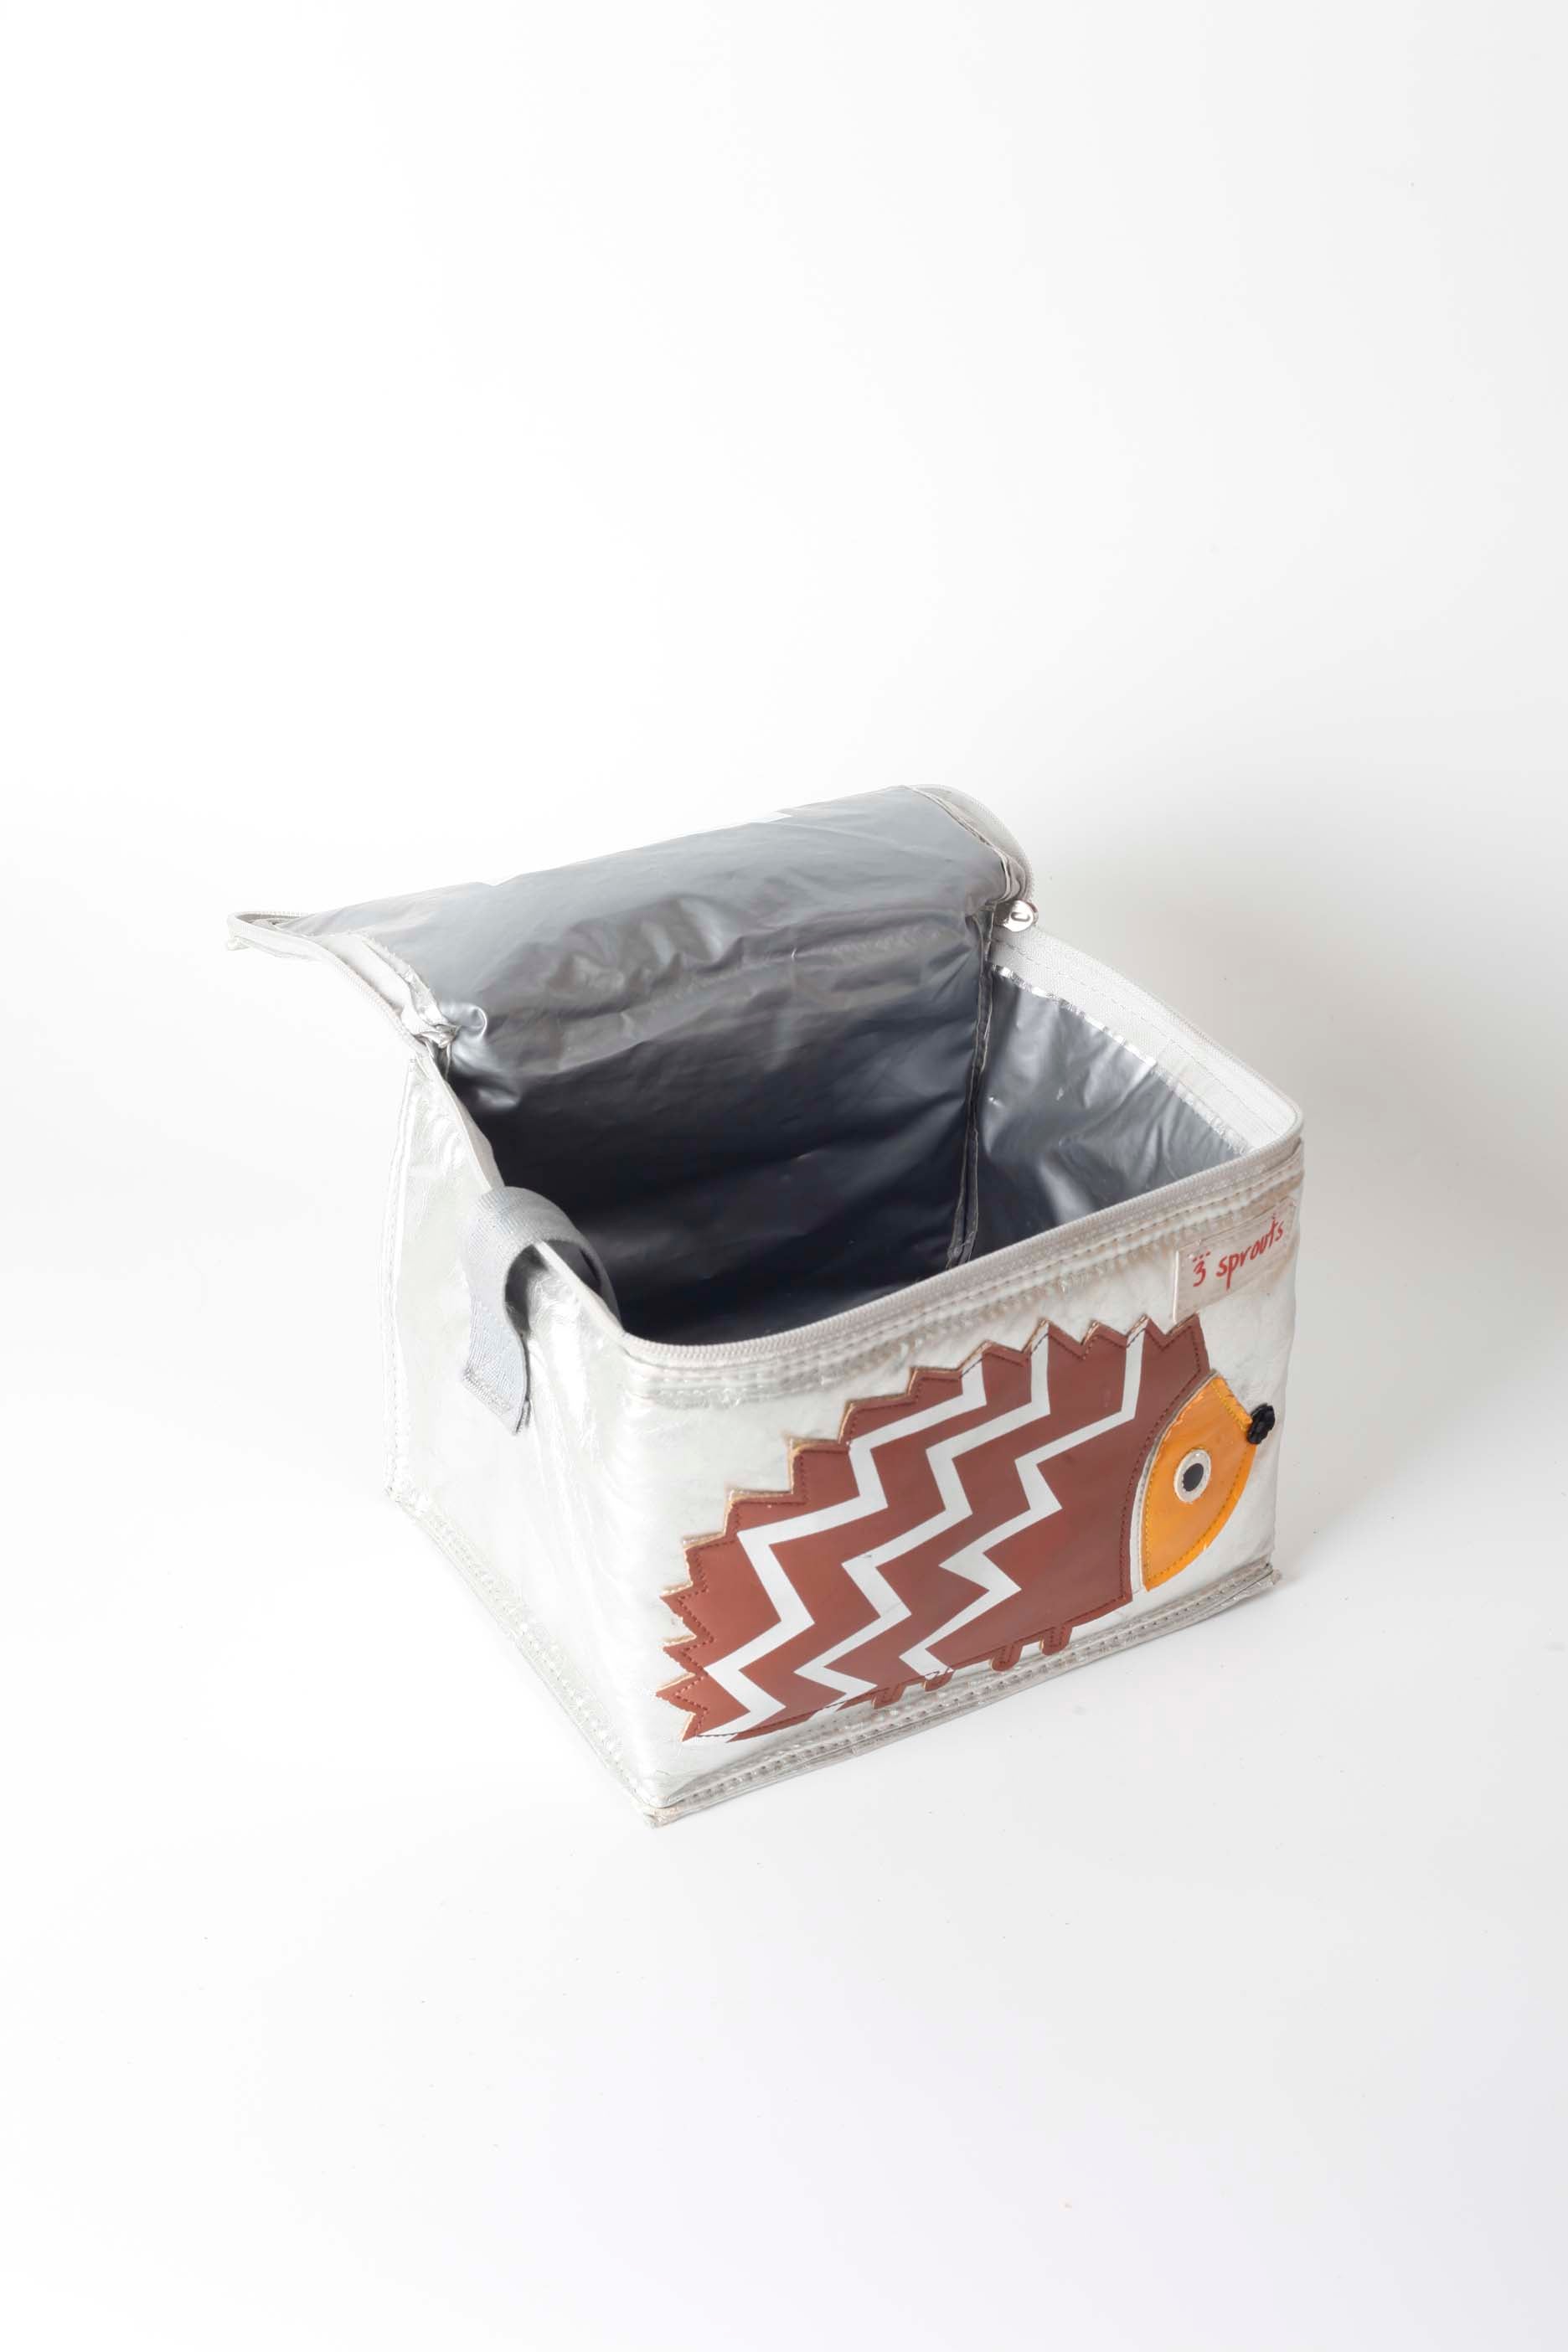 Kids Hedgehog Cool Bag Lunch Box